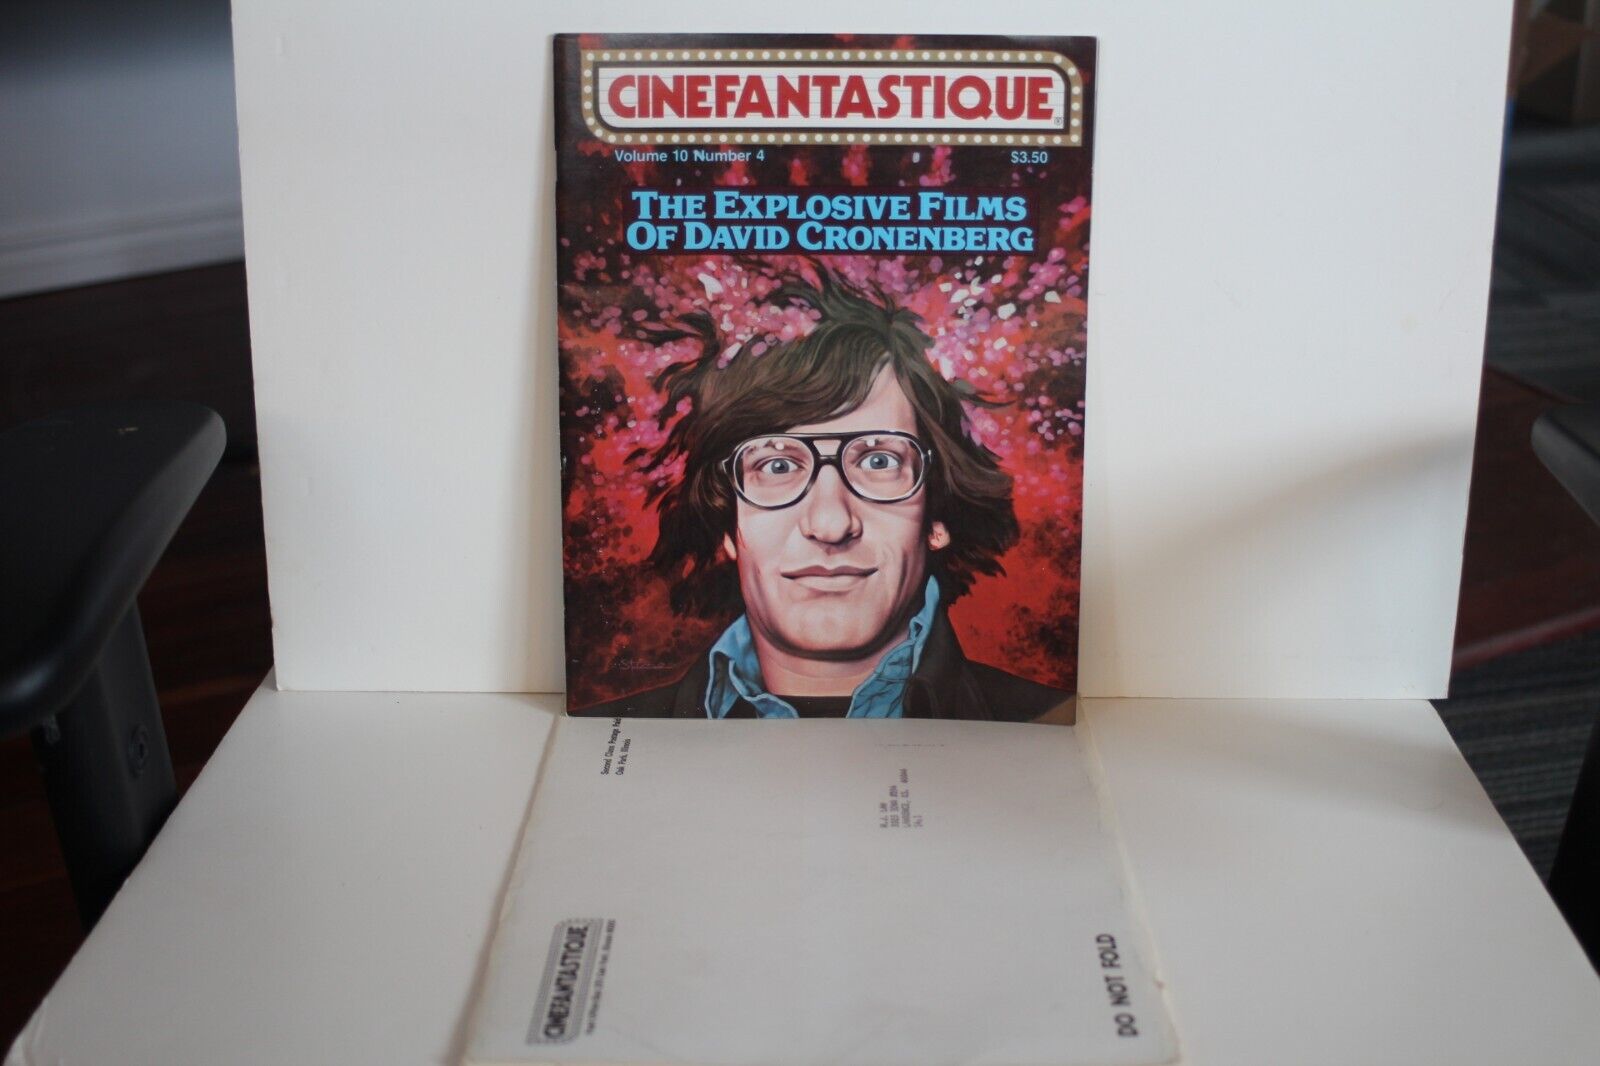 Cinefantastique Vol 10 #4 Explosive Films of David Cronenberg